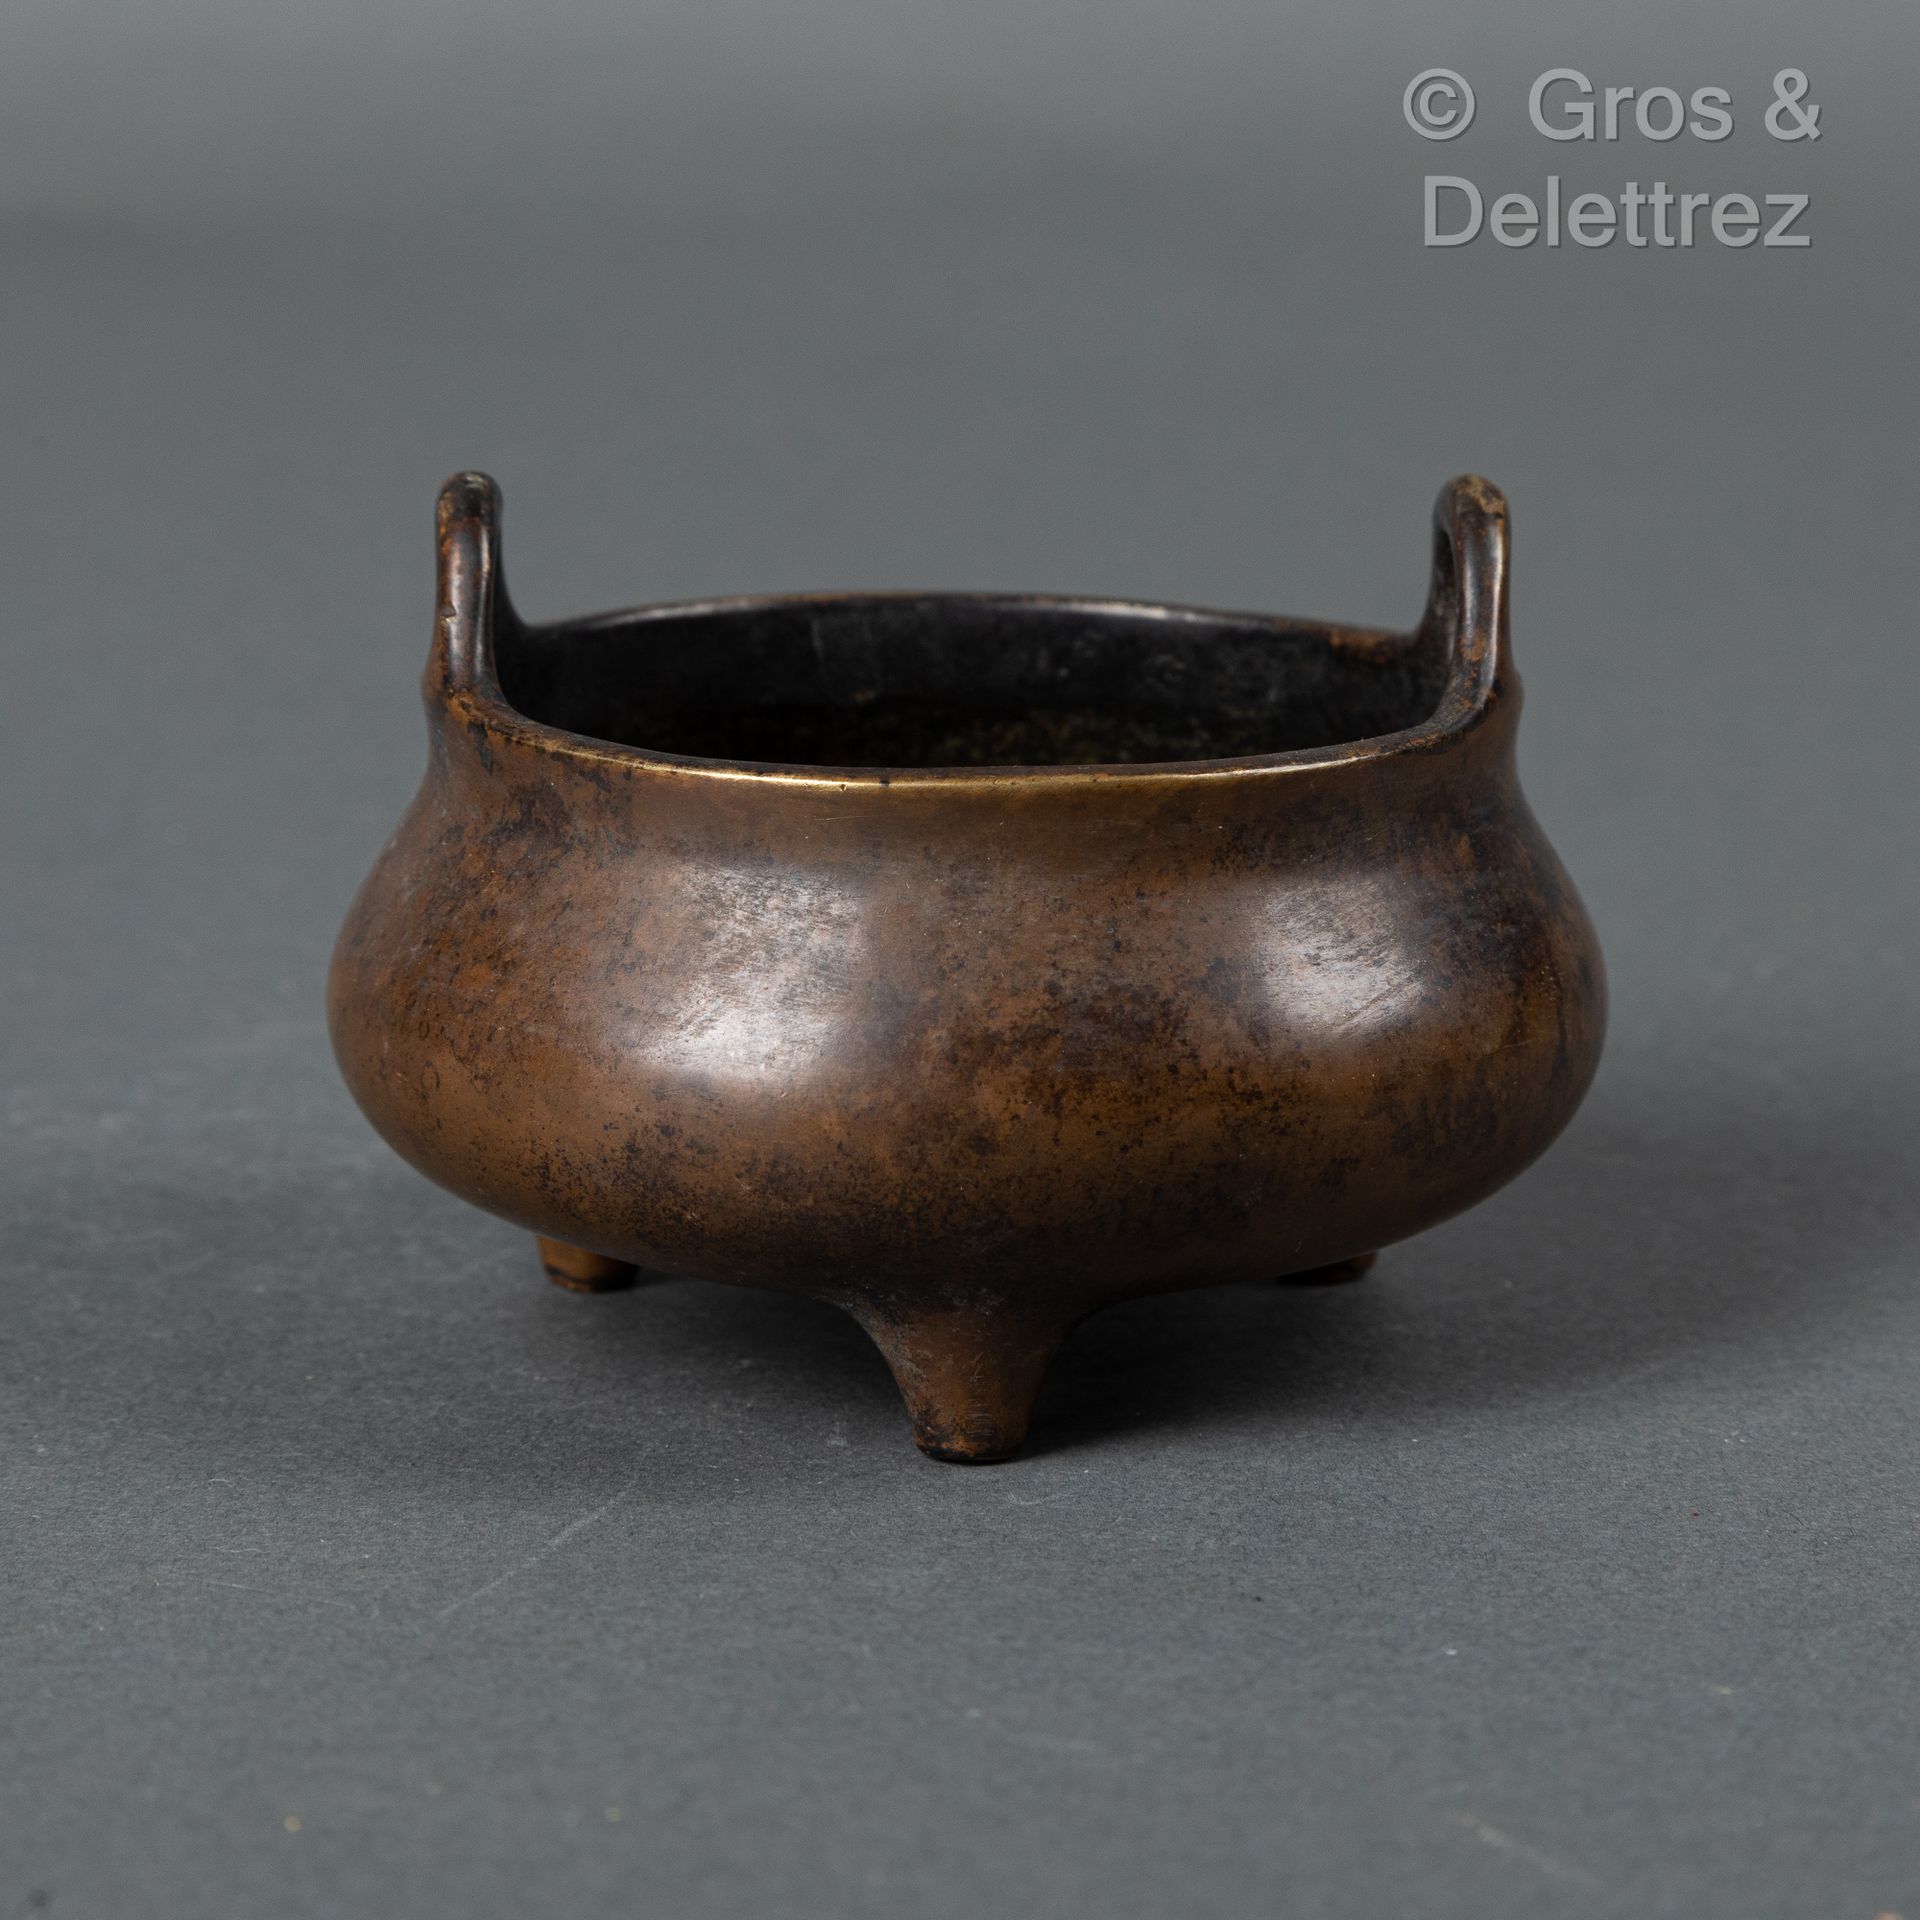 Null China, siglo XIX
Pequeño incensario trípode de bronce con dos asas curvas. &hellip;